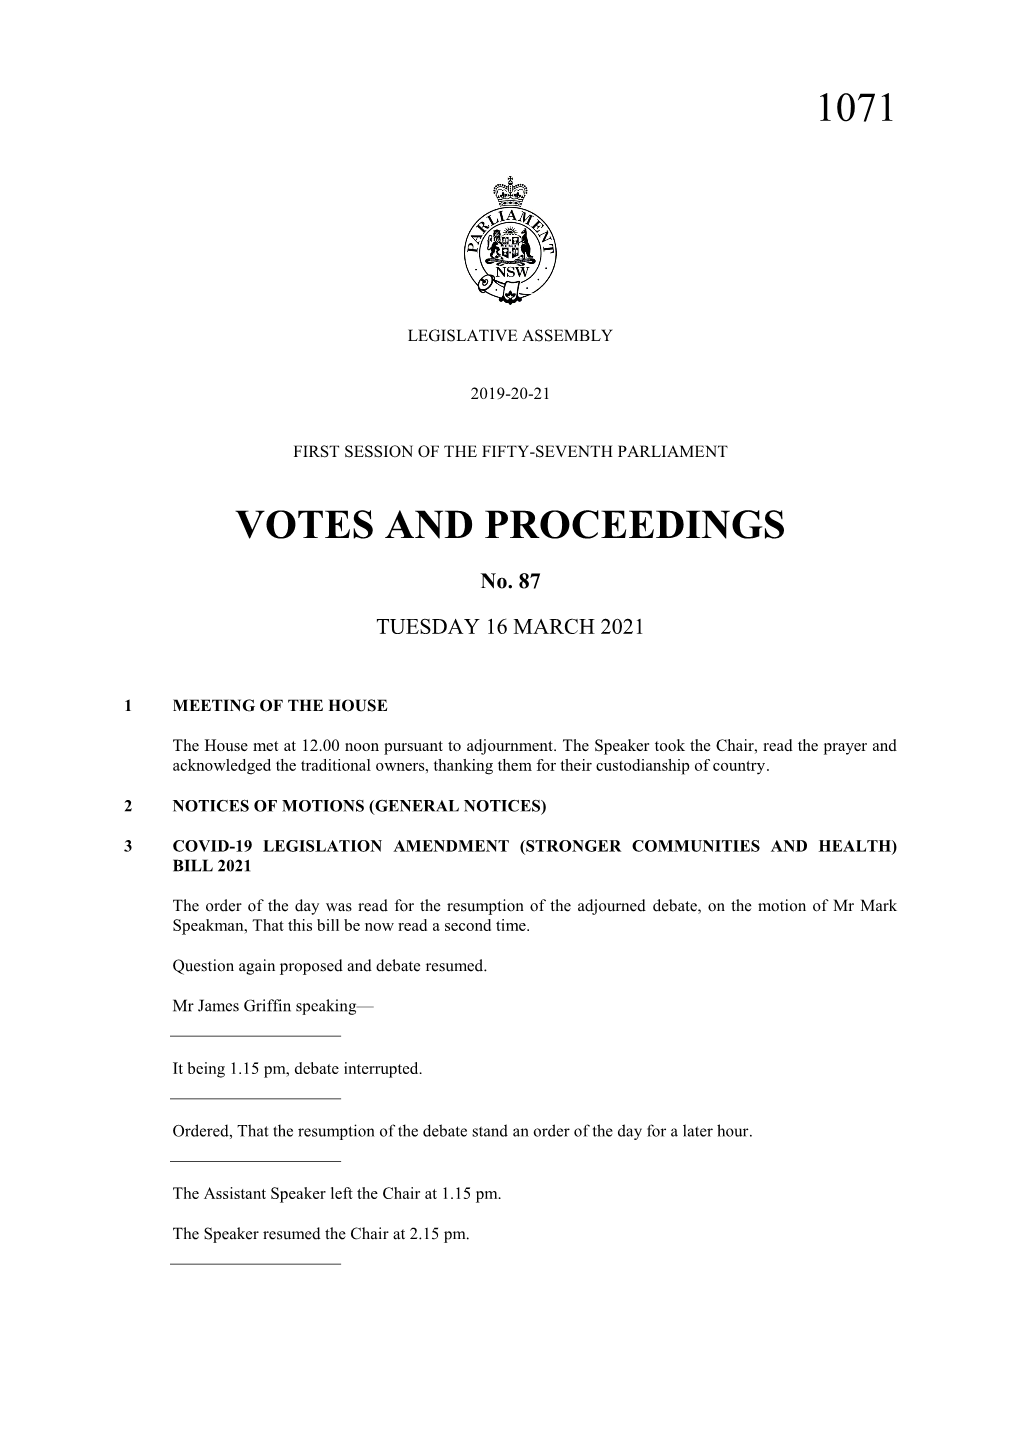 1071 Votes and Proceedings